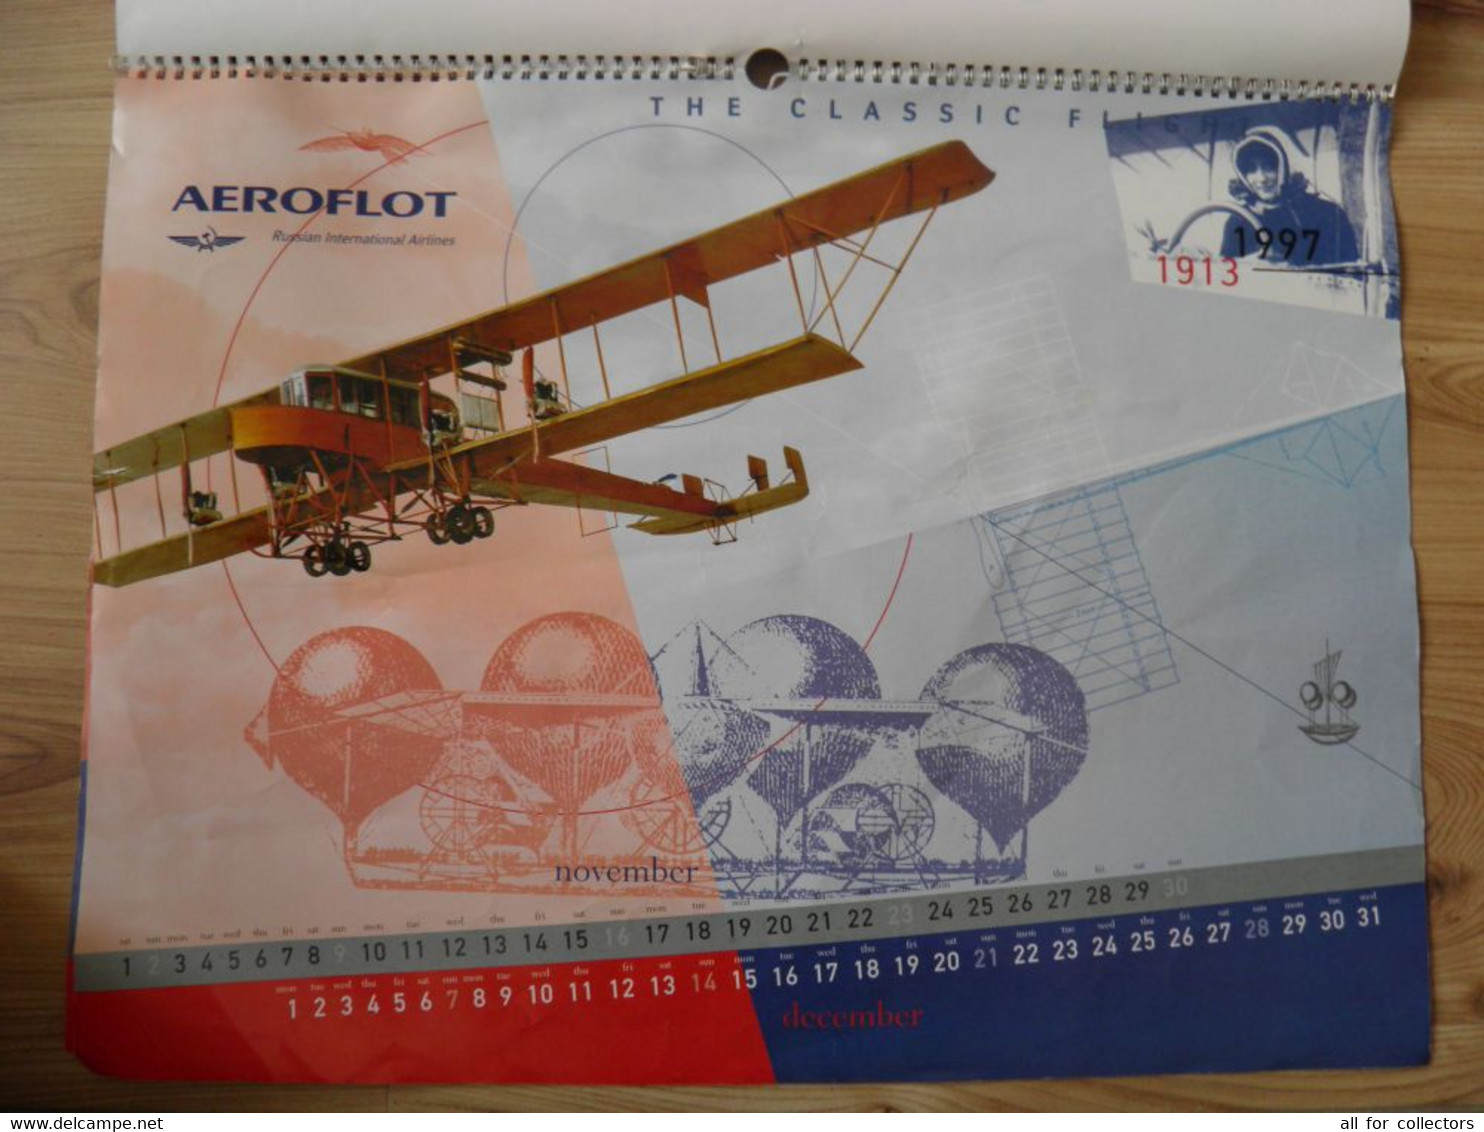 rare big calendar 45x60cm AEROFLOT soviet russian international airlines airplanes planes The classic flight russia